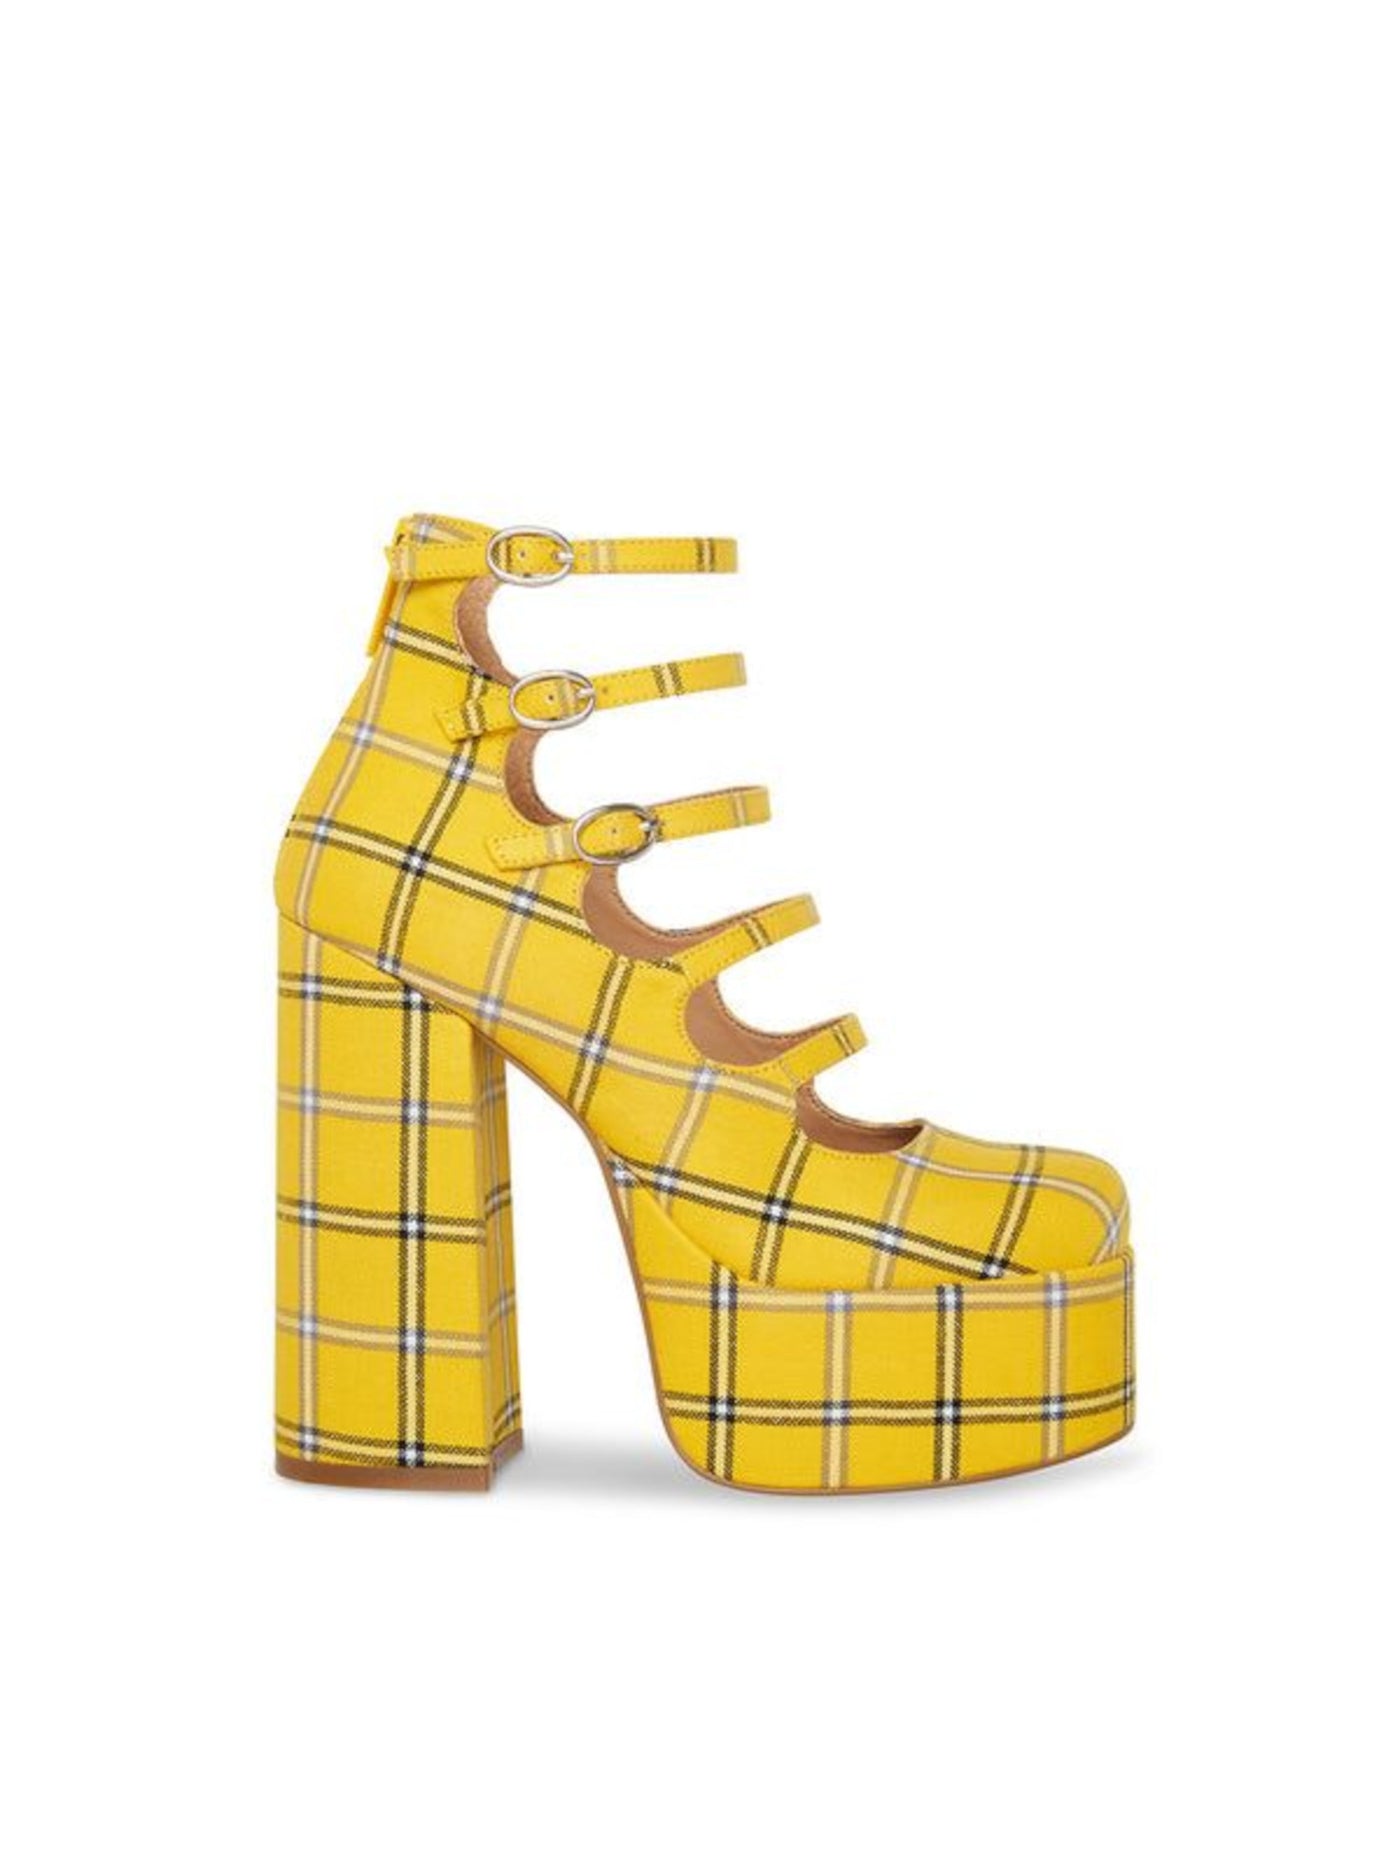 STEVE MADDEN Womens Yellow Plaid 3" Platform Adjustable Round Toe Block Heel Zip-Up Dress Pumps Shoes 8.5 M